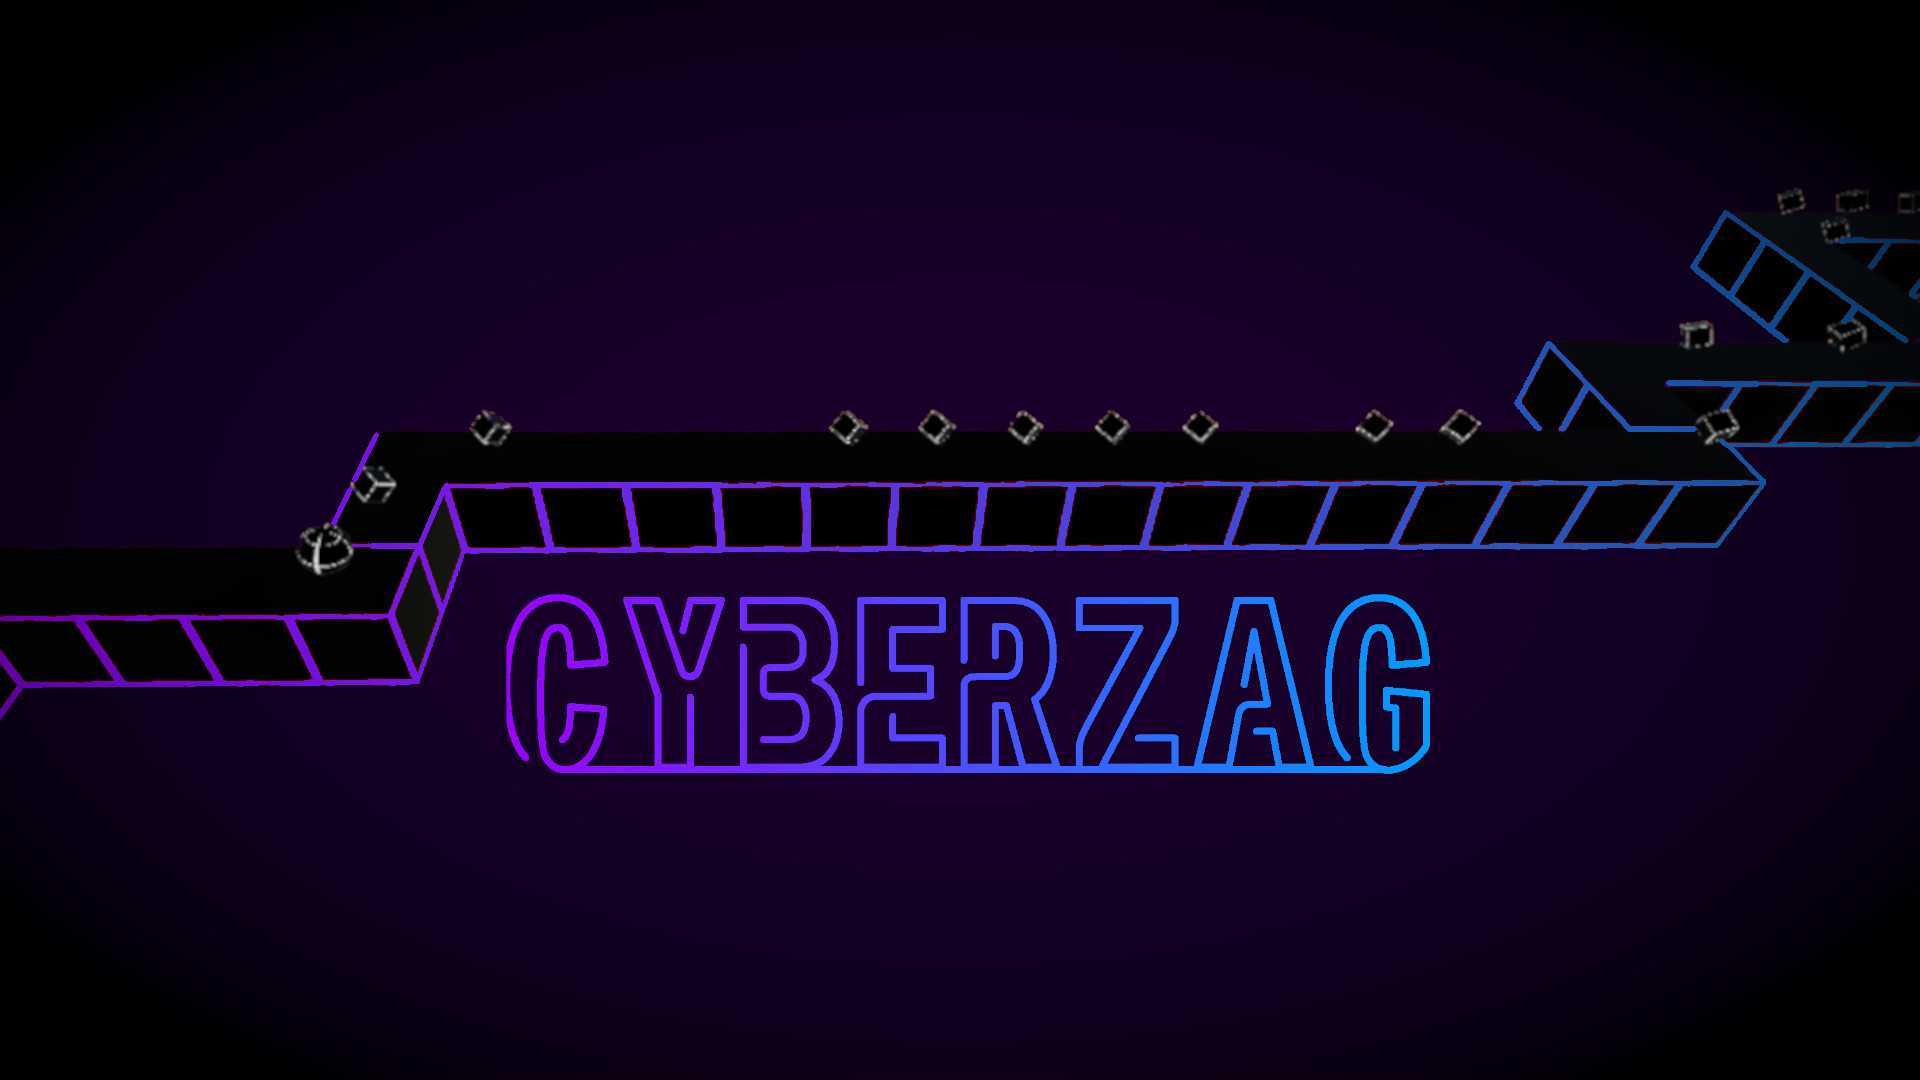 CyberZag